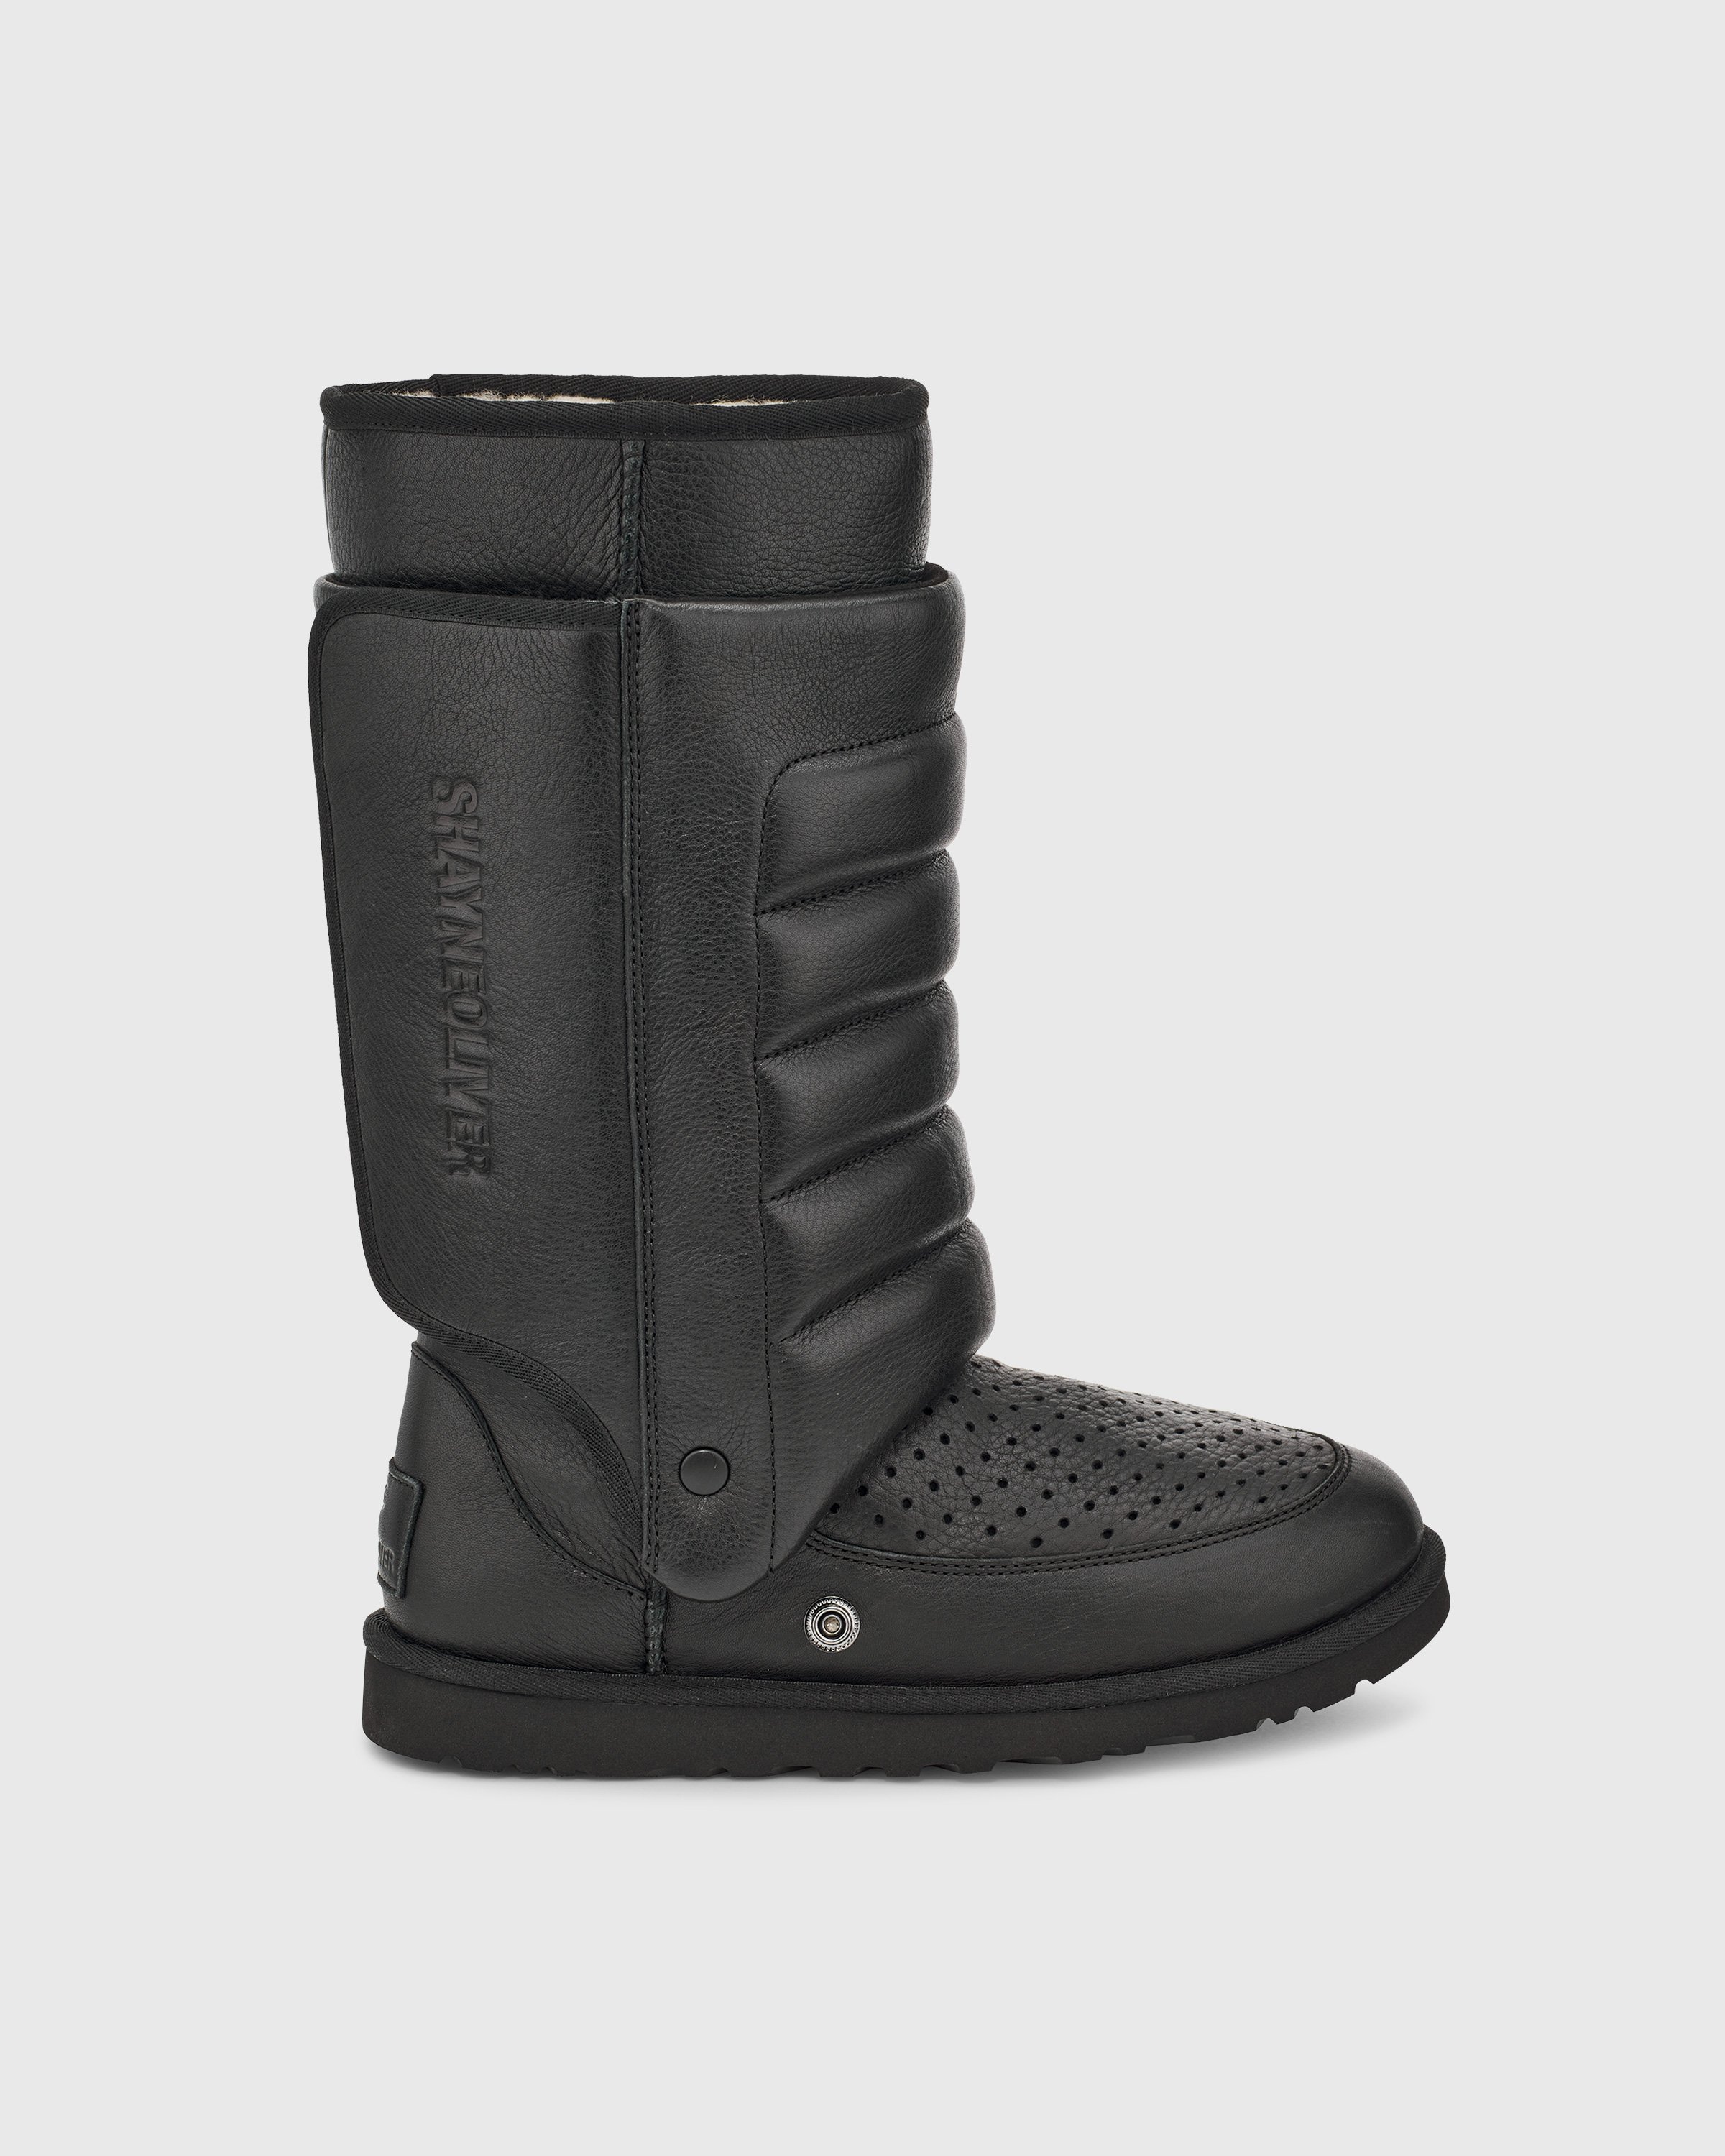 Ugg x Shayne Oliver - Tall Boot Black - Footwear - Black - Image 4